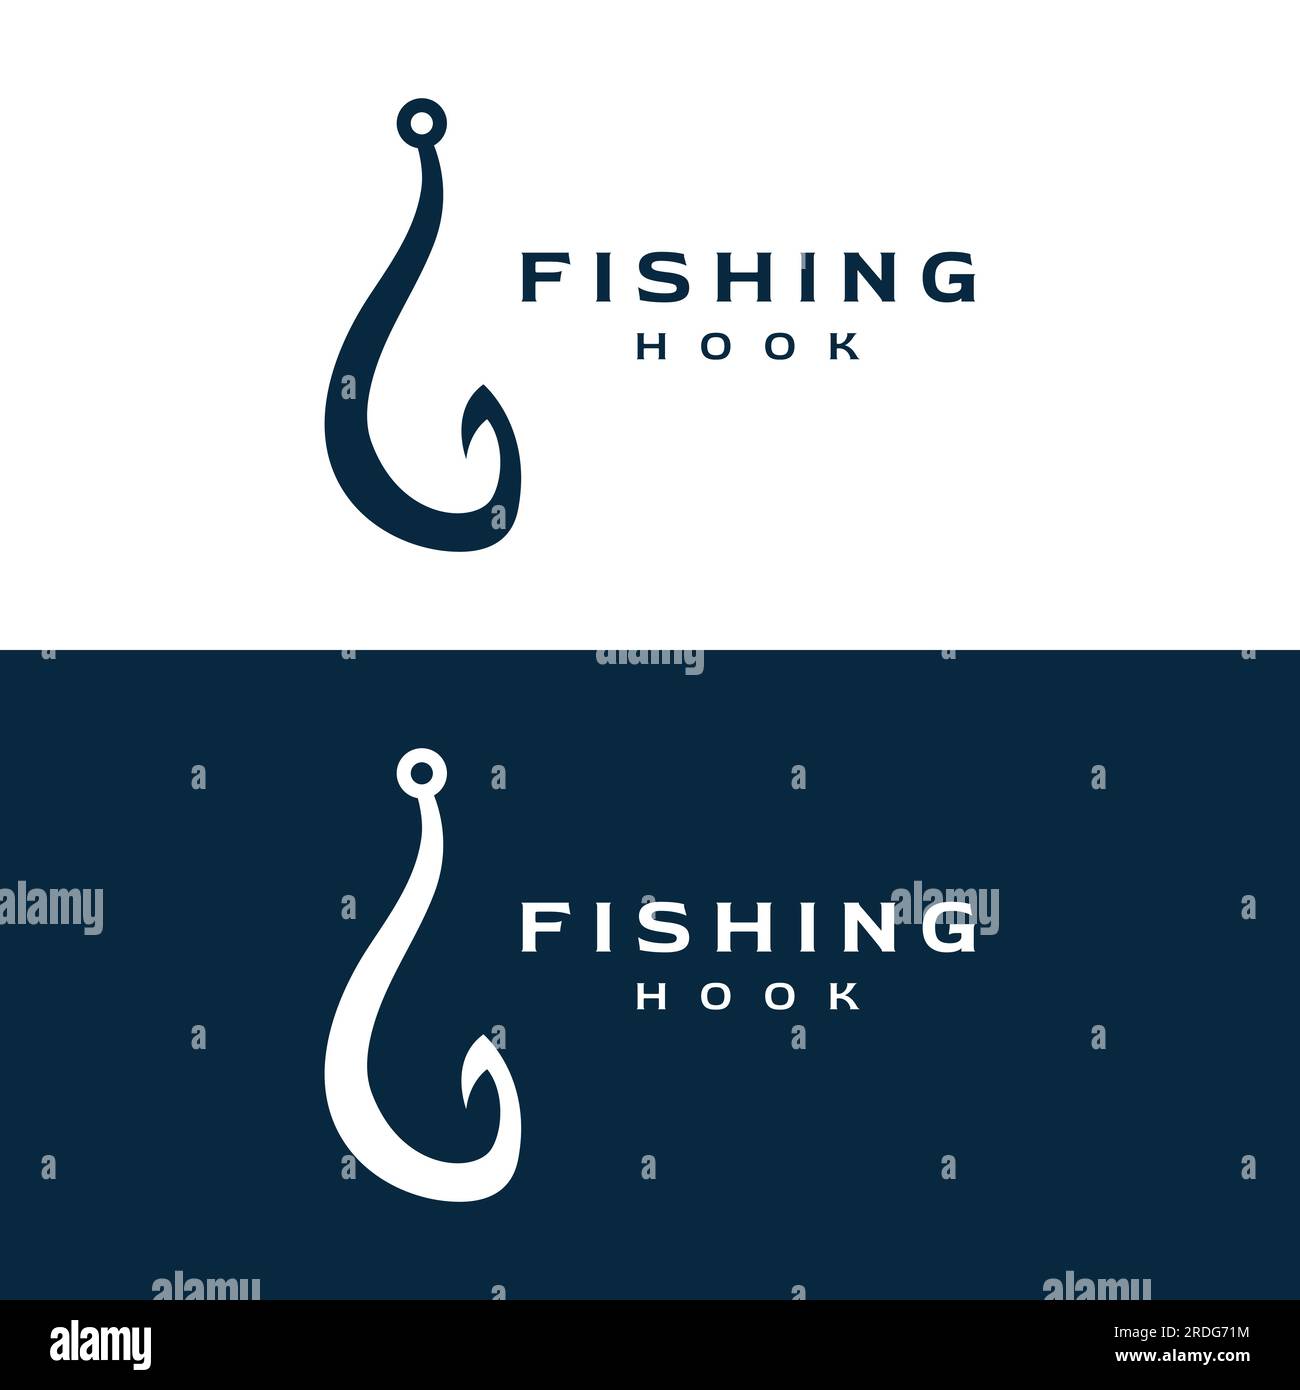 https://c8.alamy.com/comp/2RDG71M/vintage-fishing-hook-logo-as-a-fishing-toollogo-for-business-hook-shop-or-fishing-shopfishinglabel-and-stamp-2RDG71M.jpg